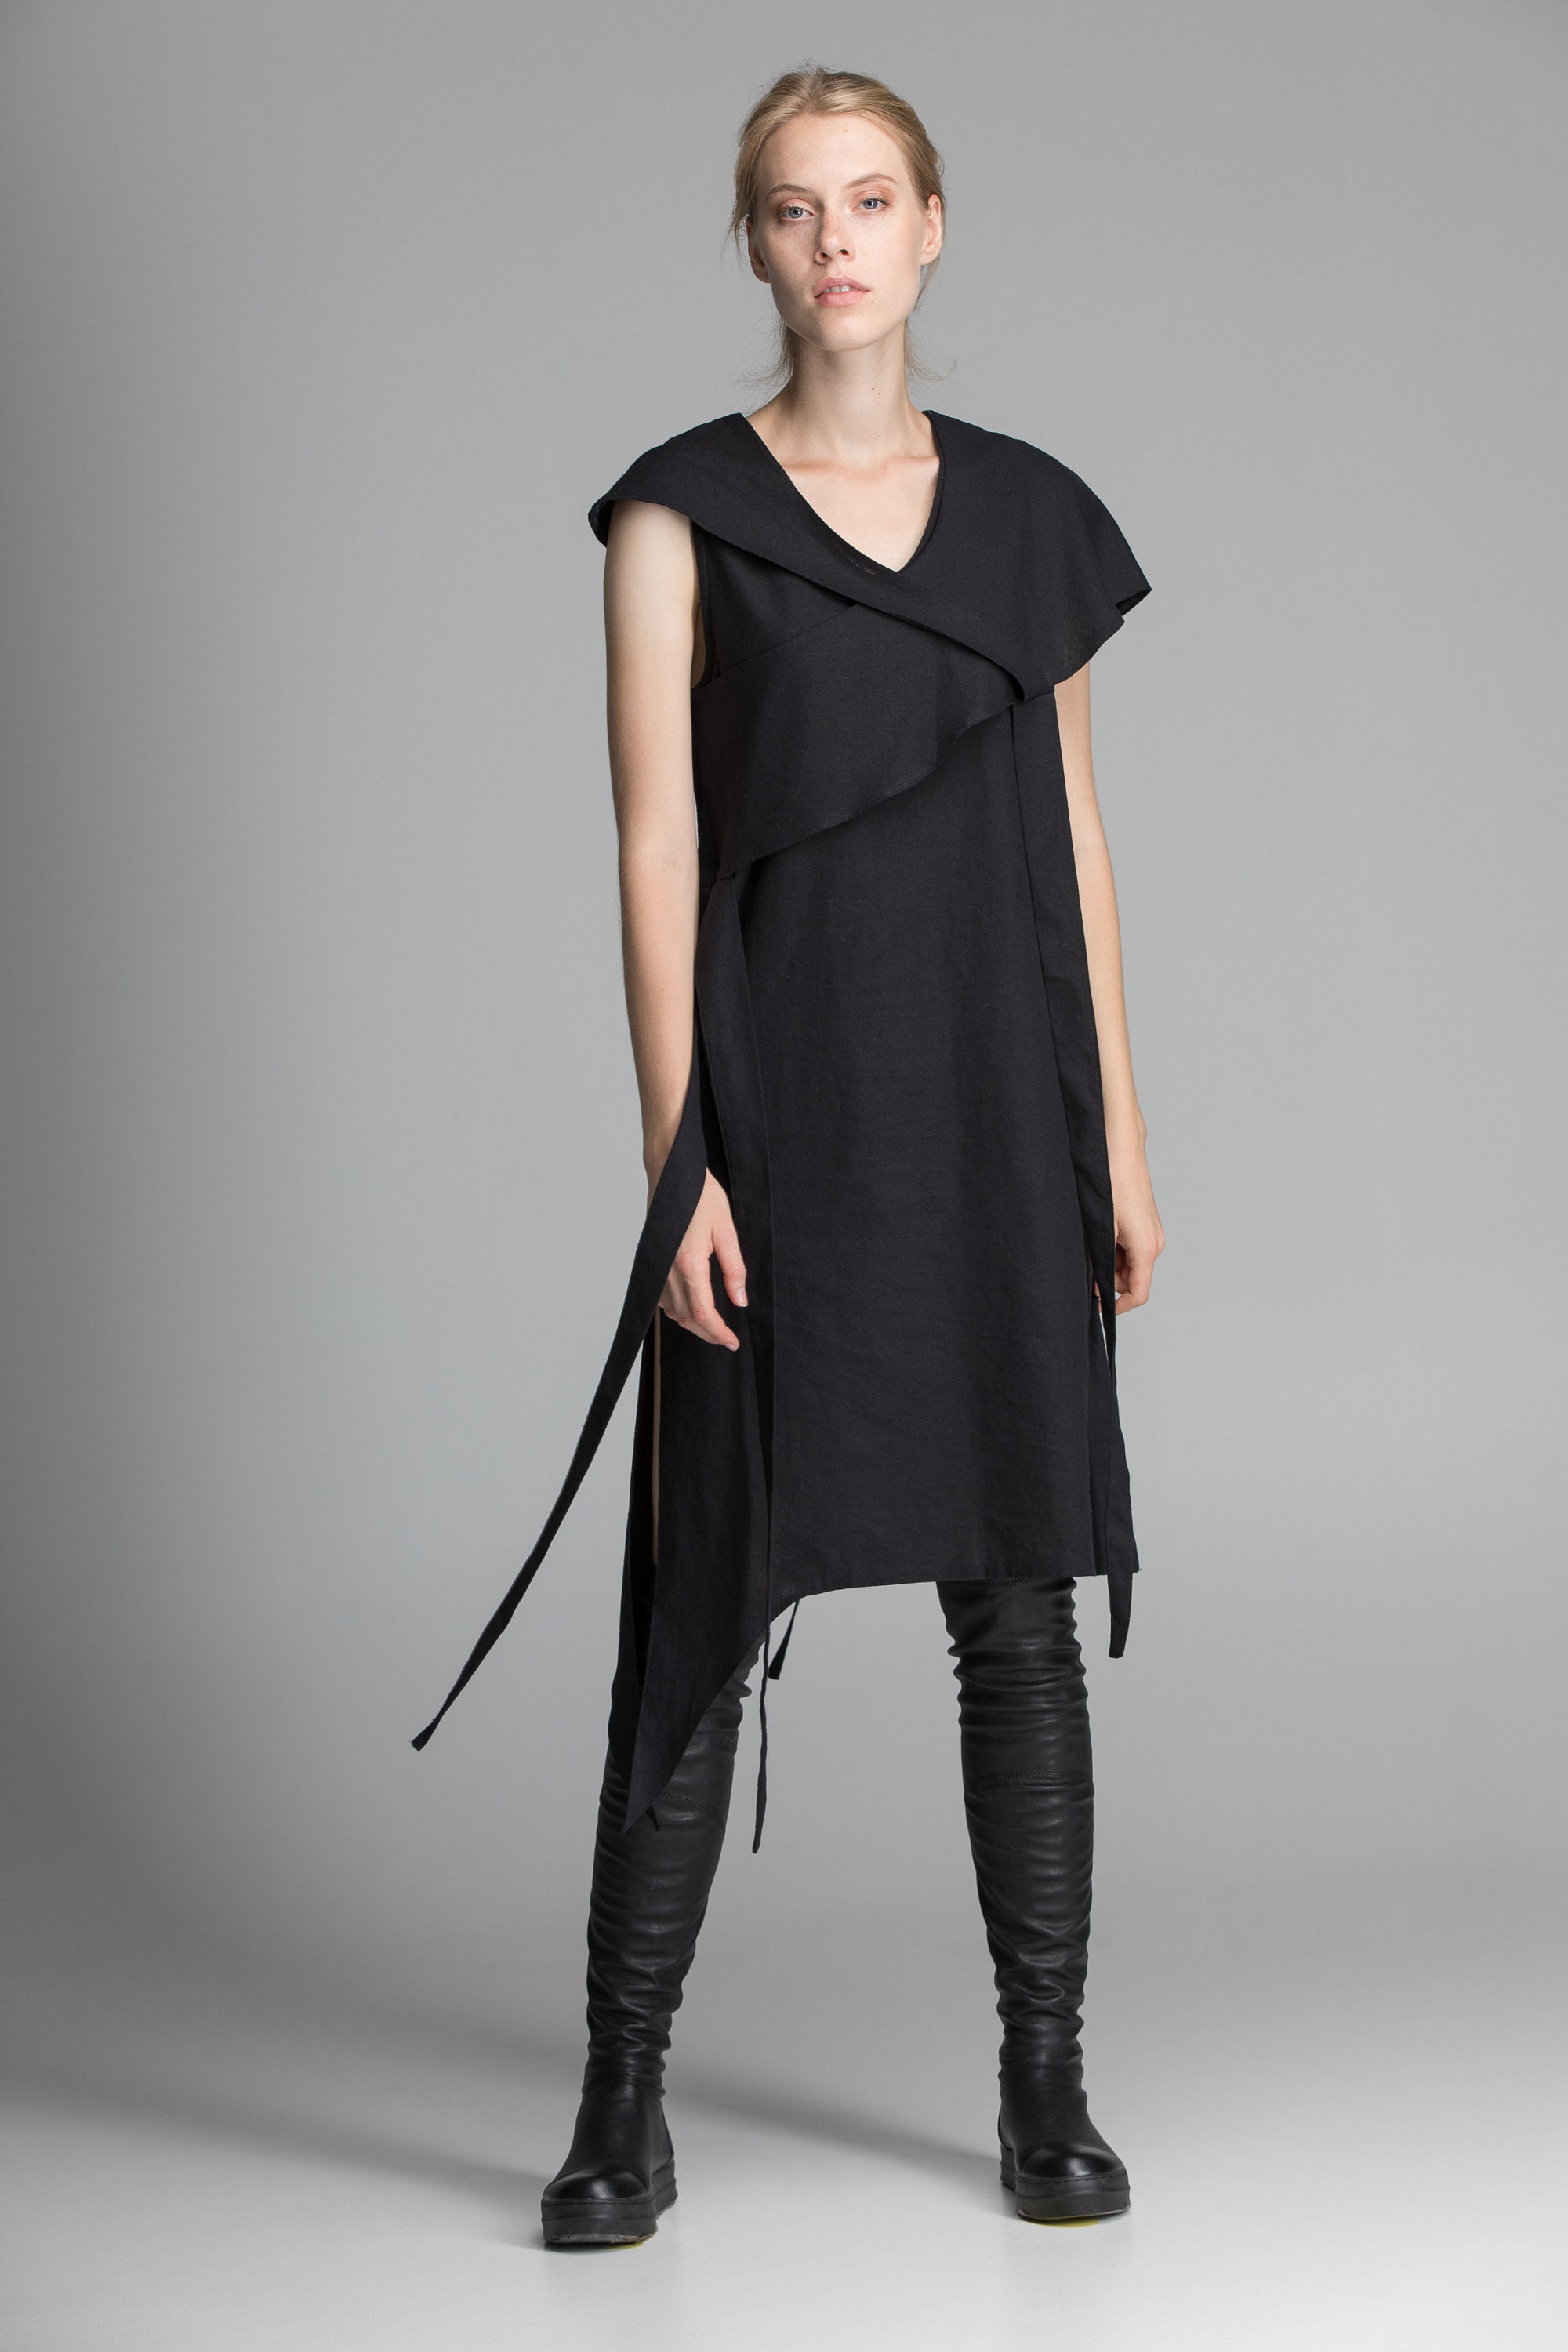 Linen black asymmetric dress v neck cut sleeveless tunic | Etsy